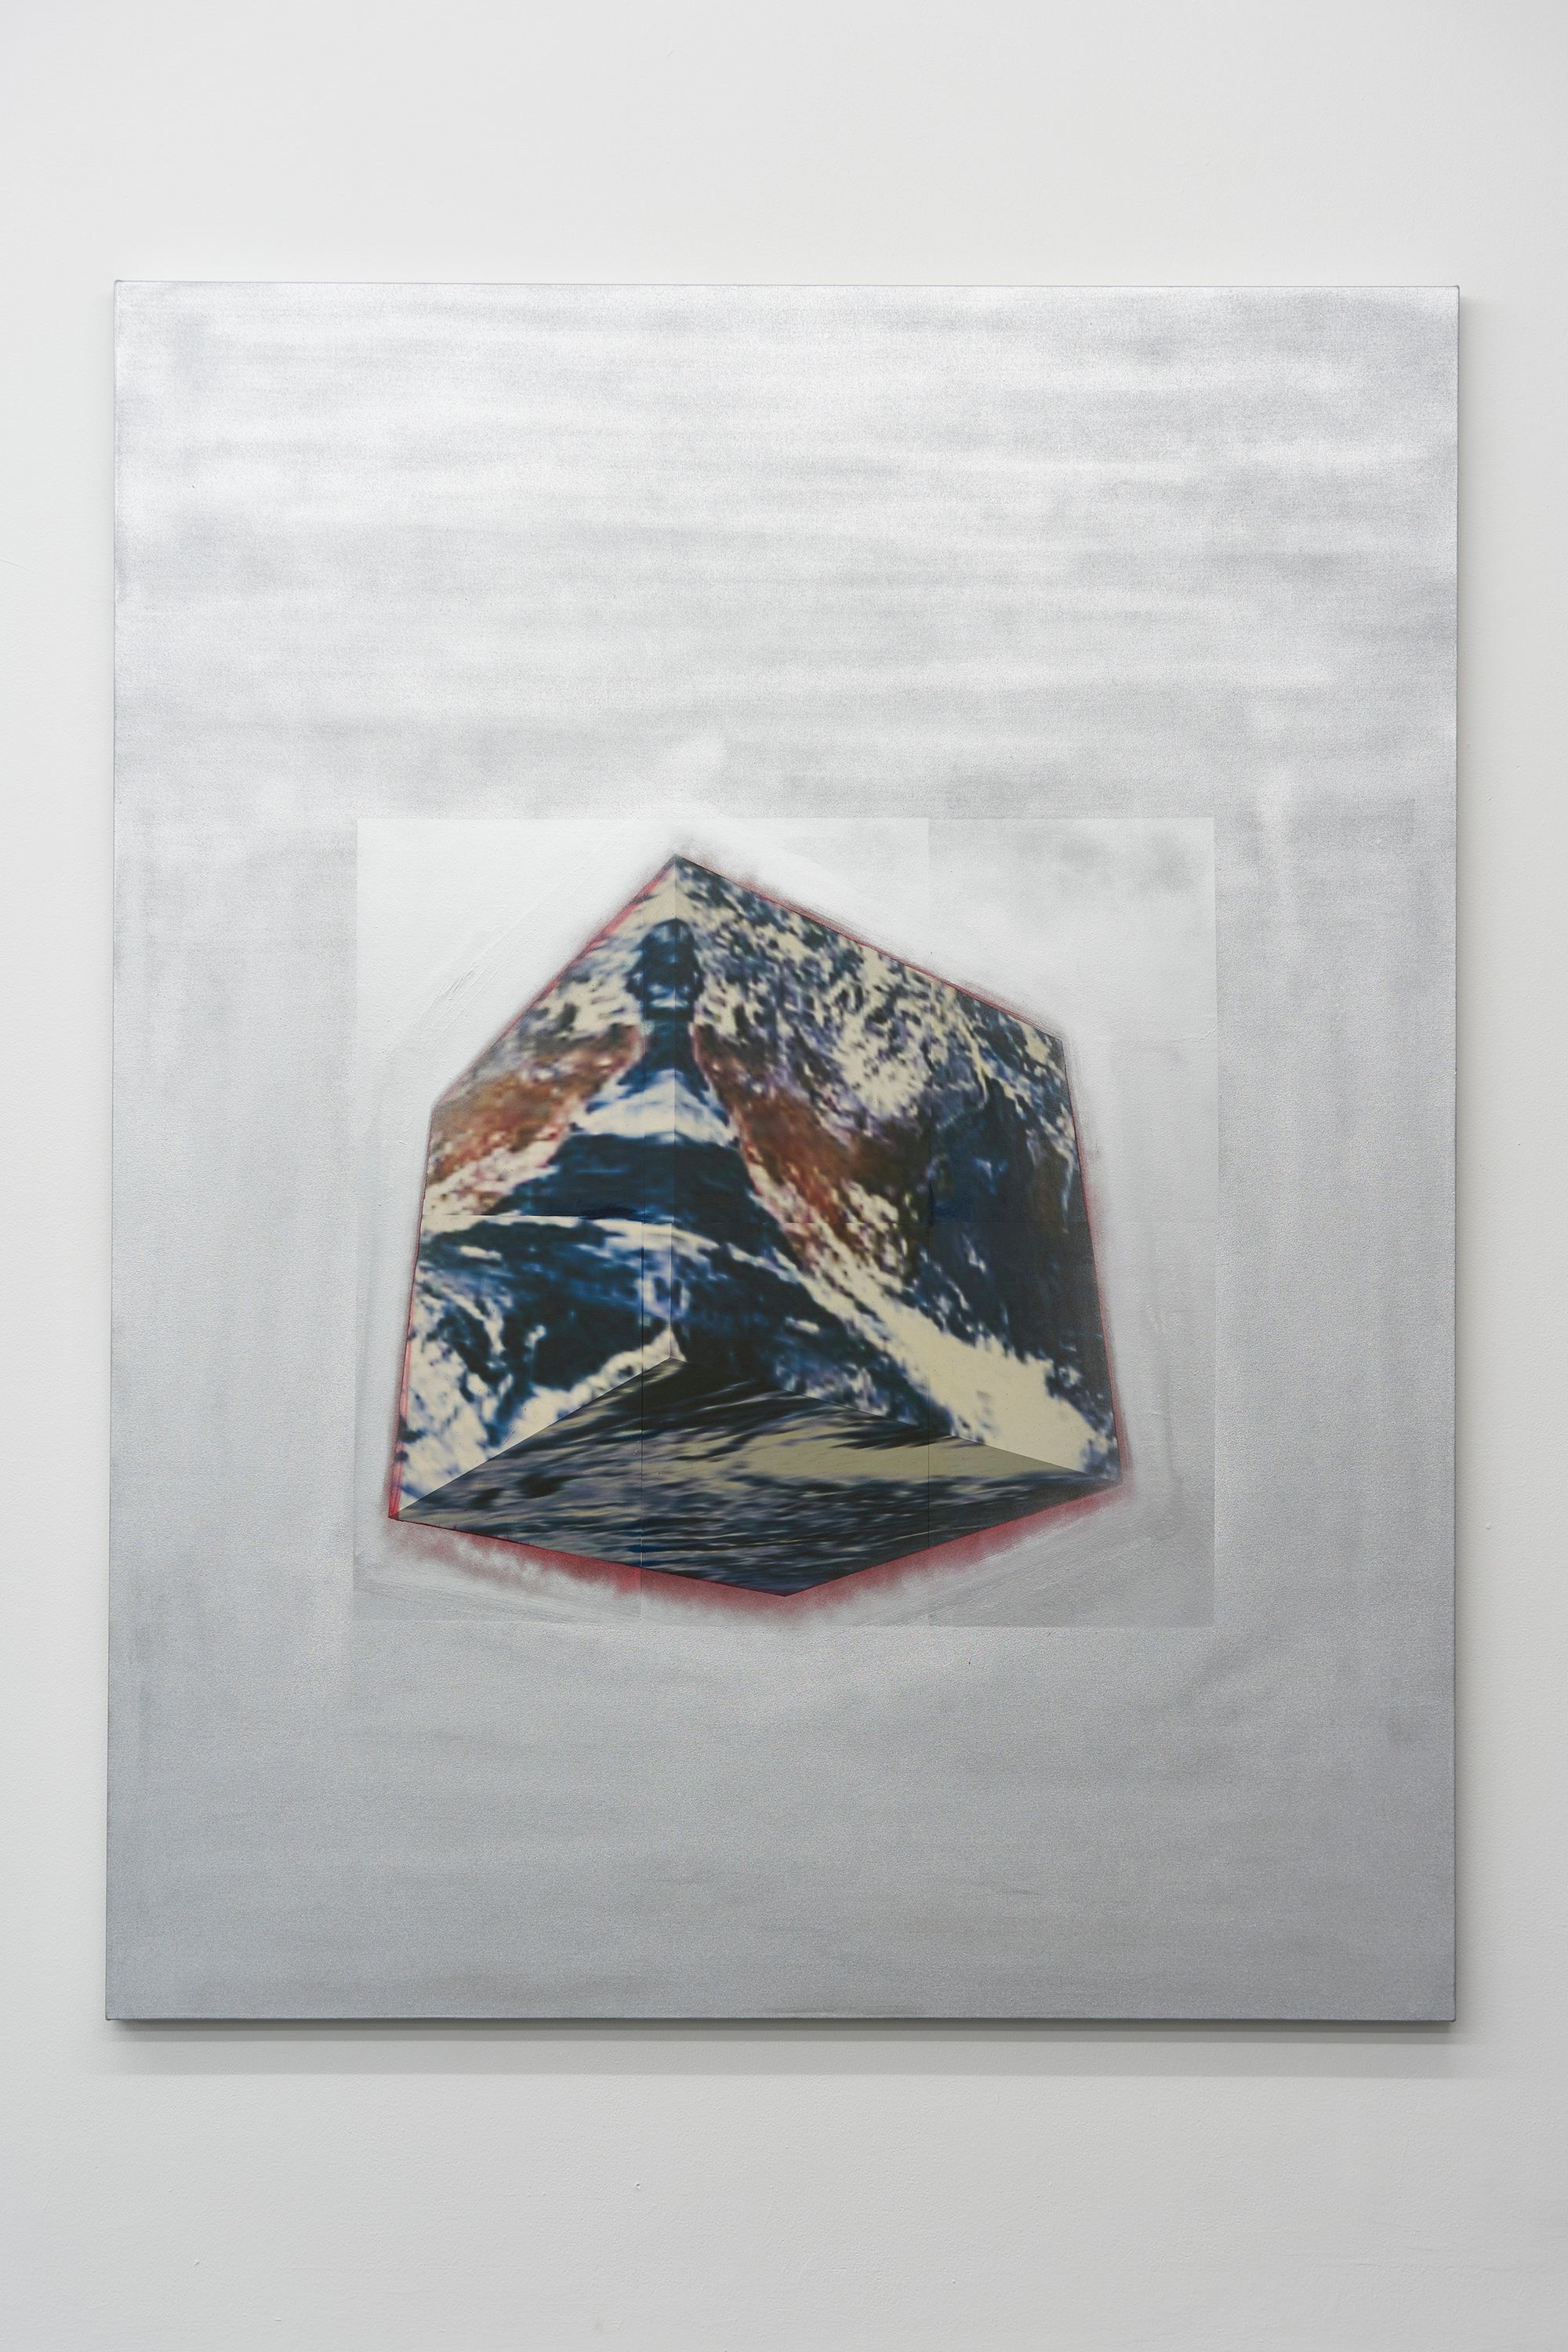 Tobias Spichtig, Die Erde, 2018, Vinyl print, oil and laquer on canvas, 180 ⁠× ⁠140 ⁠⁠cm